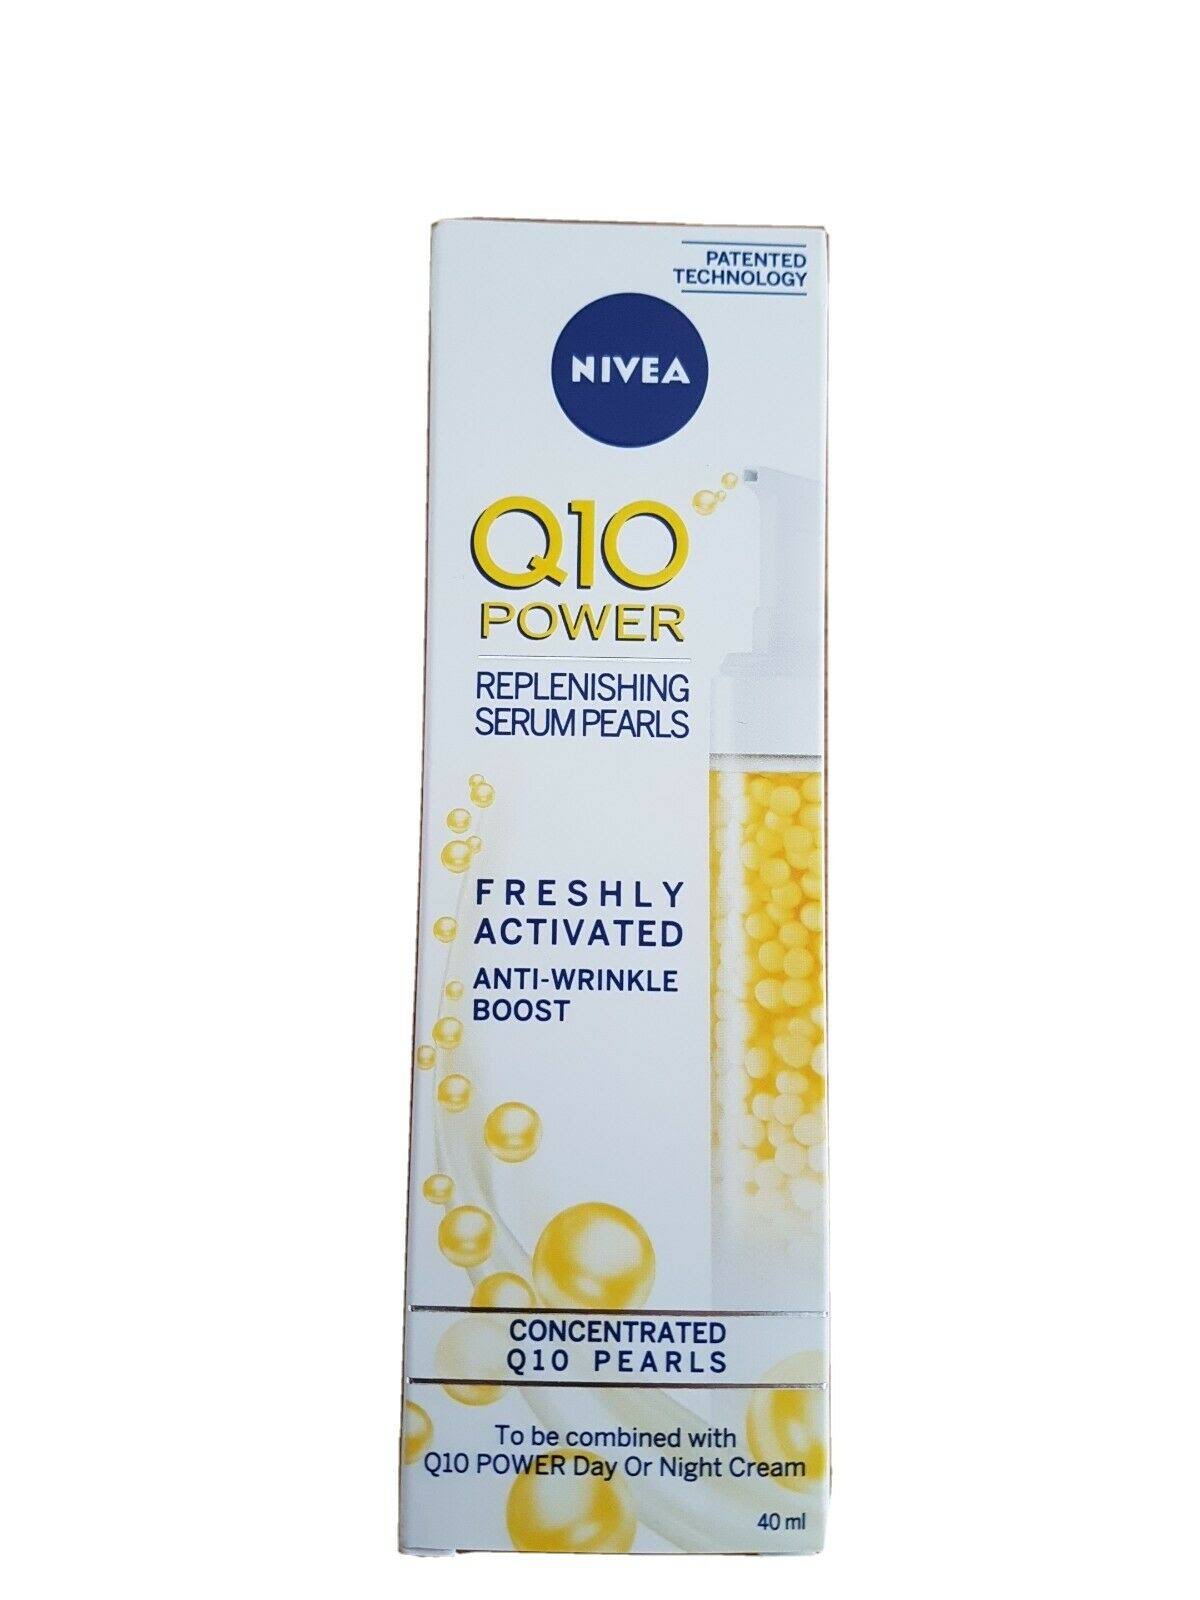 NIVEA Q10 Power Anti-Wrinkle and Firming Replenishing Serum Pearls - 40ml